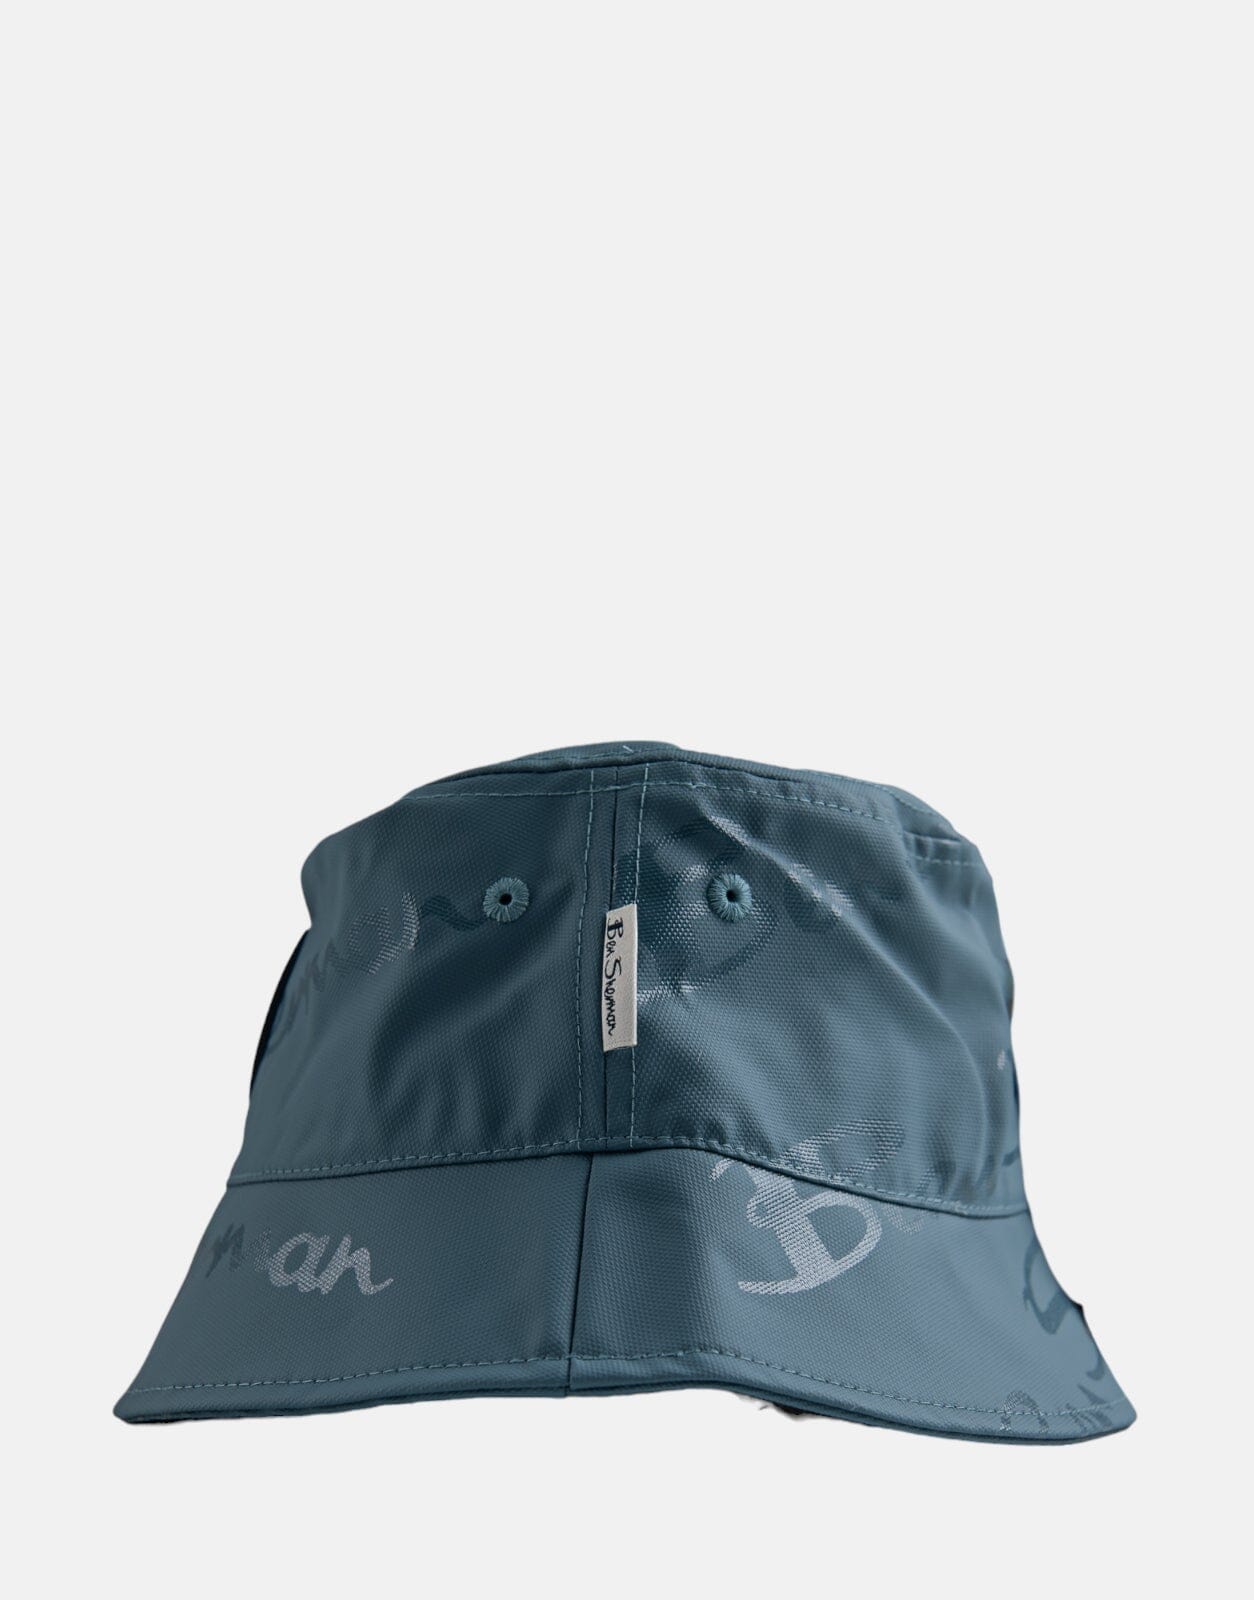 Ben Sherman Wax Target Bucket Hat CIT - Subwear